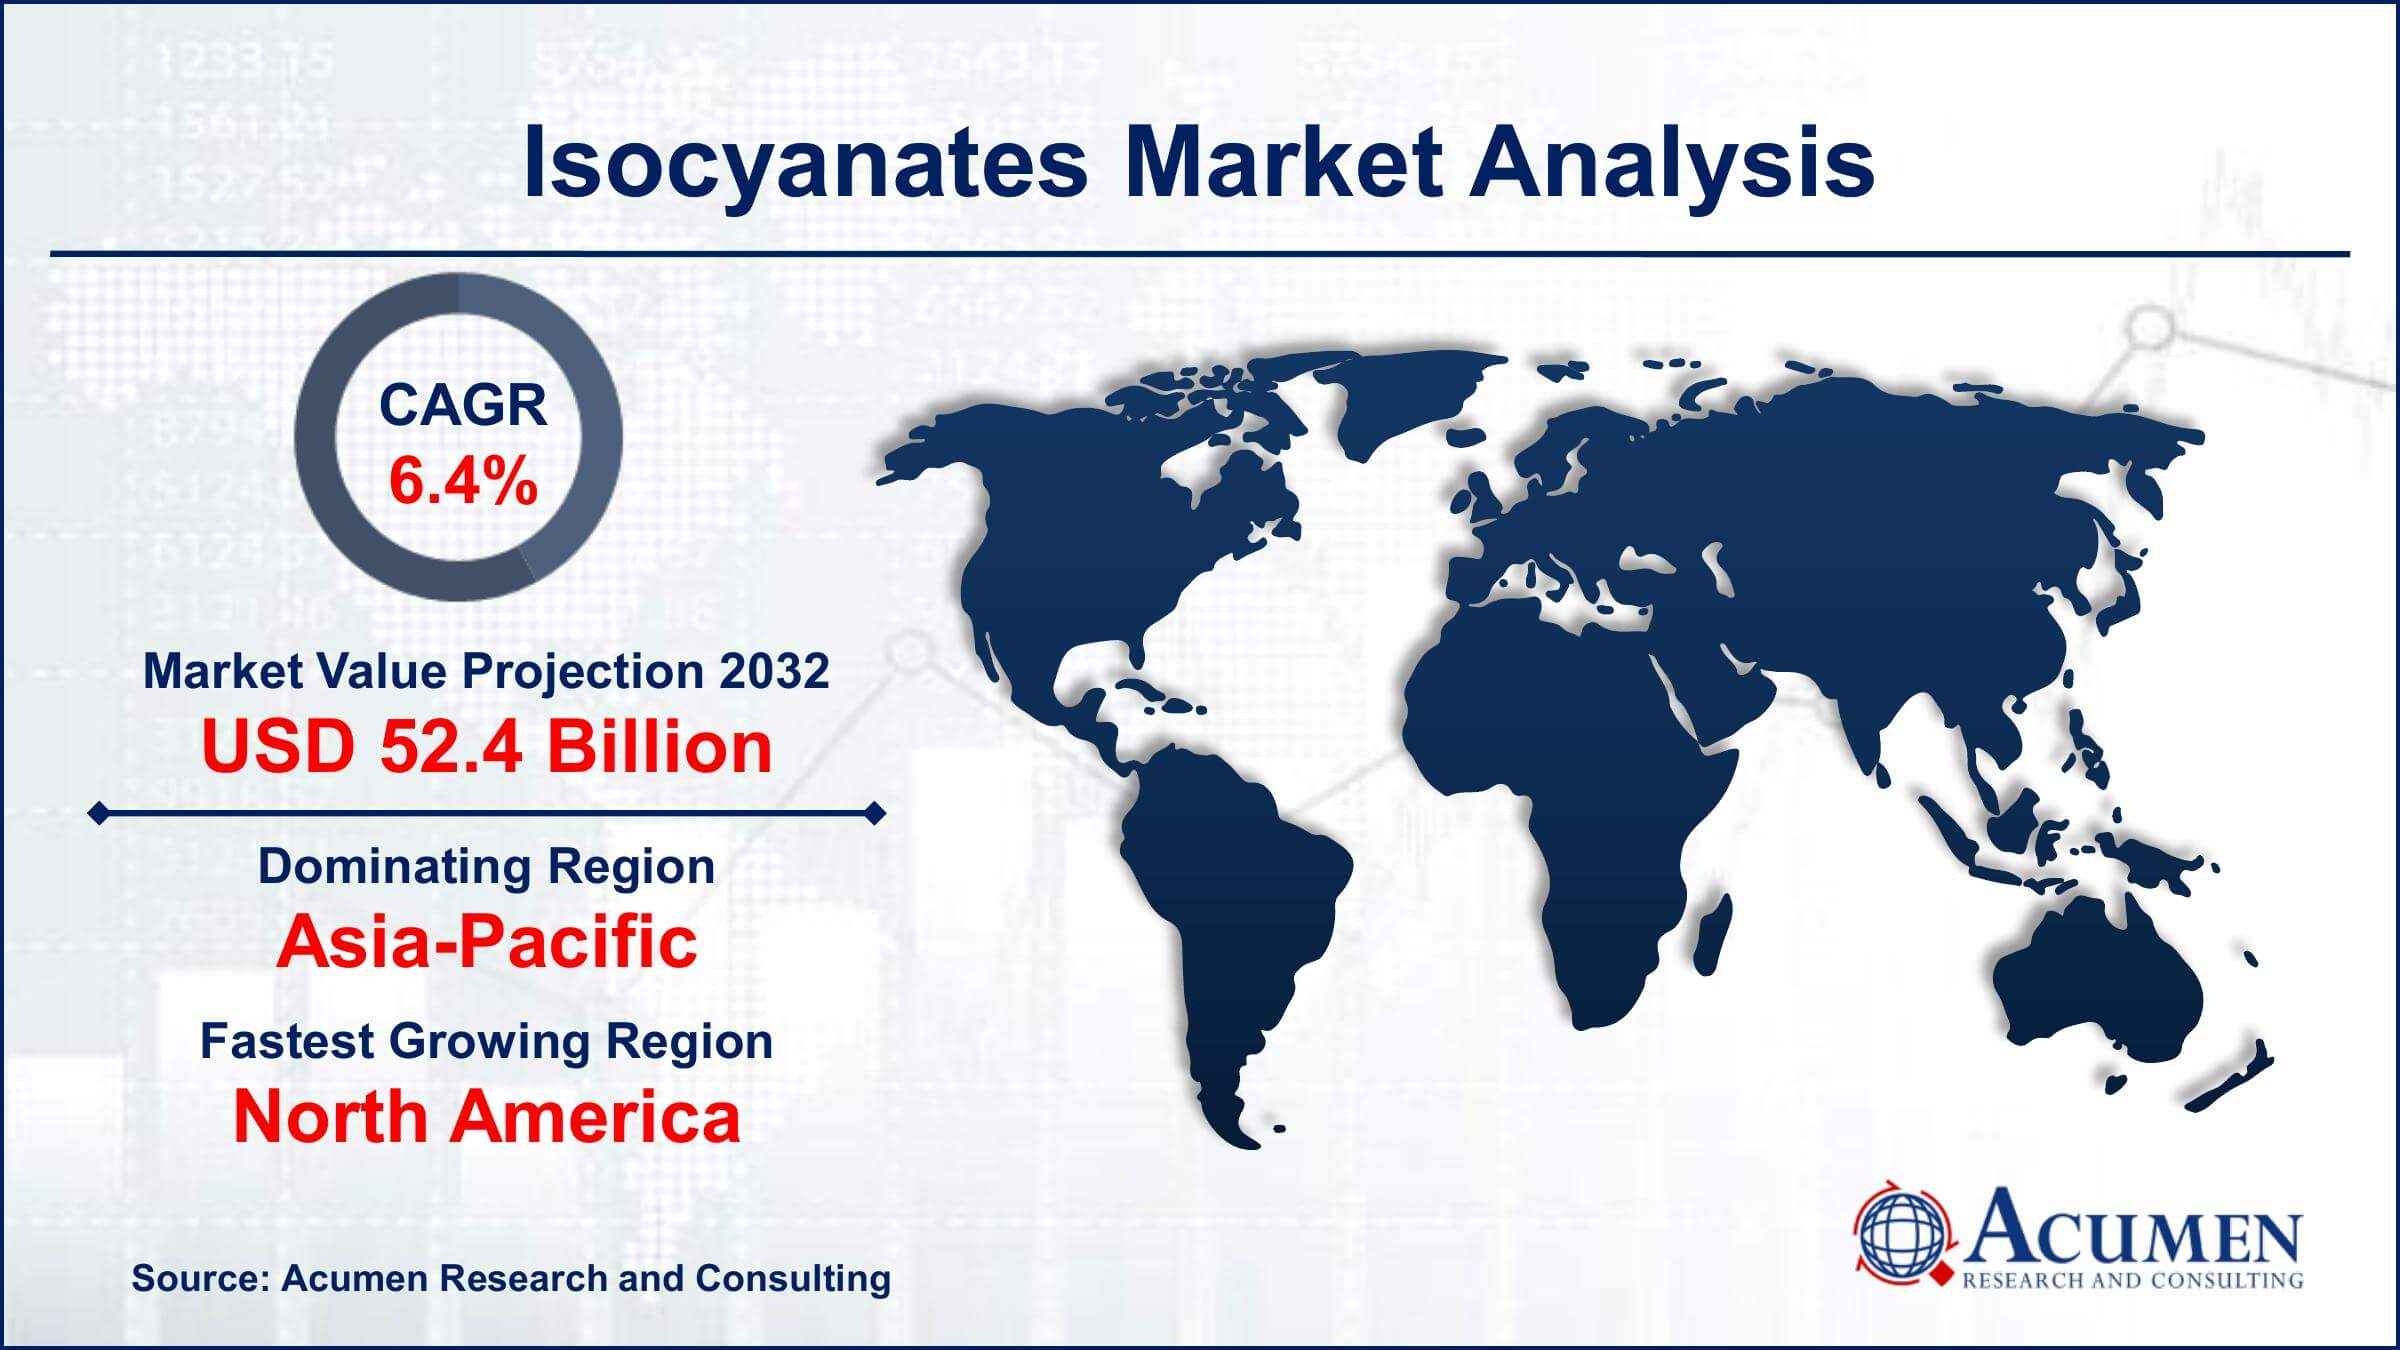 Global Isocyanates Market Trends